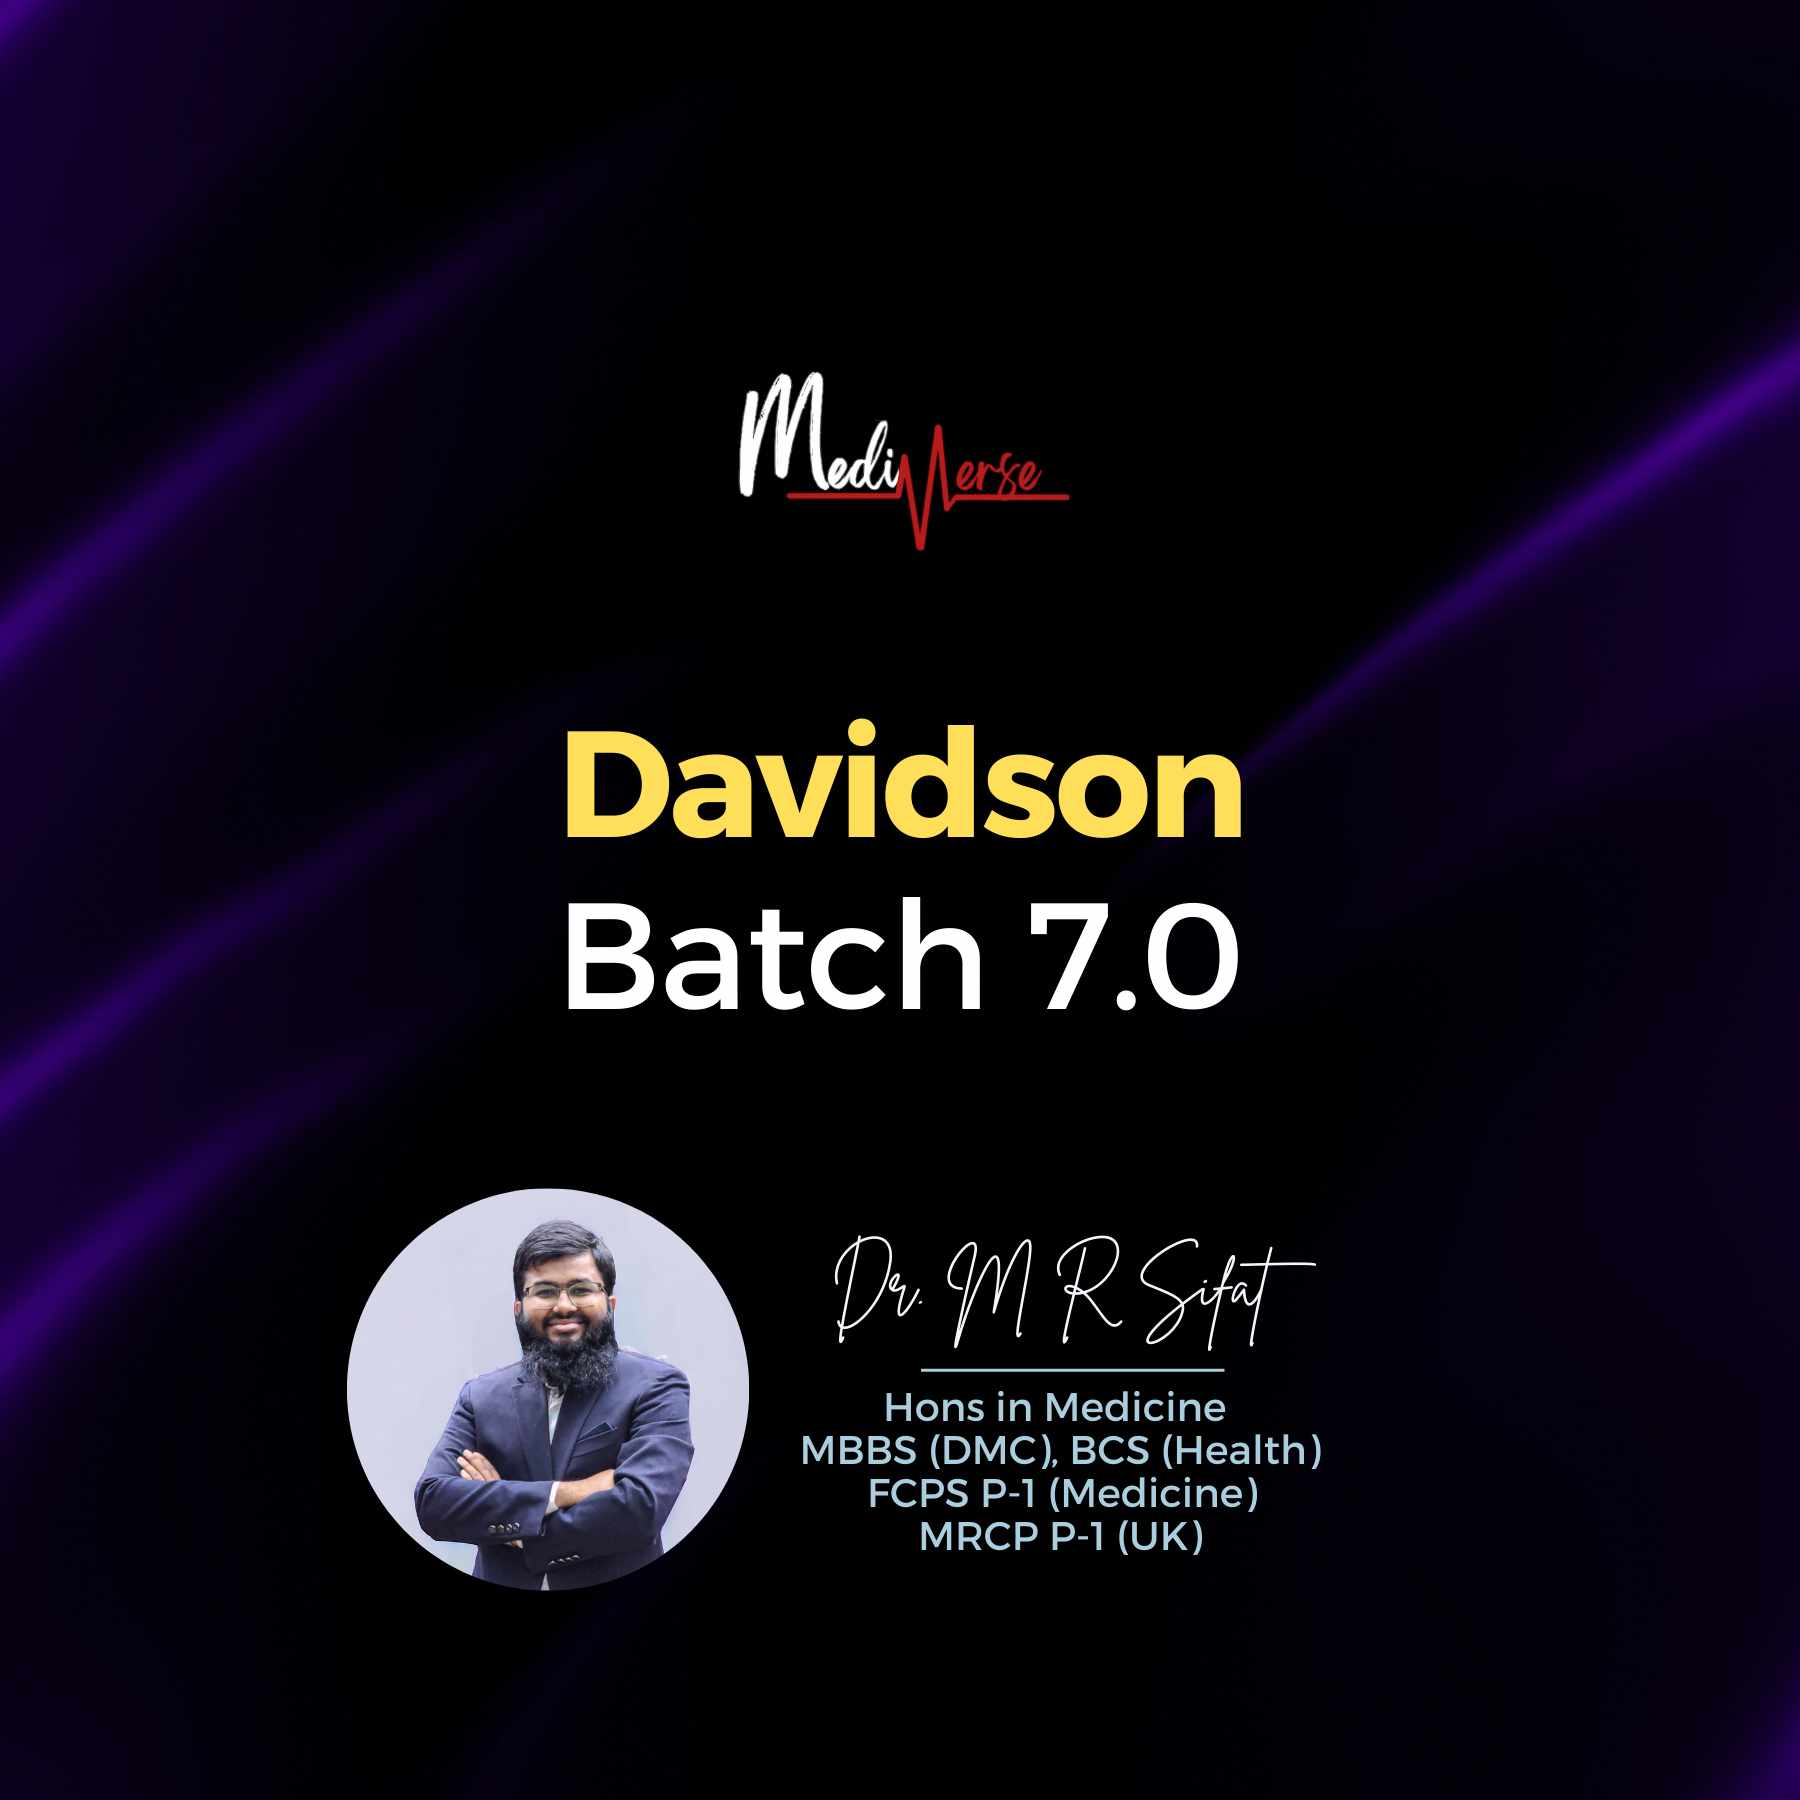 Davidson Batch 7.0